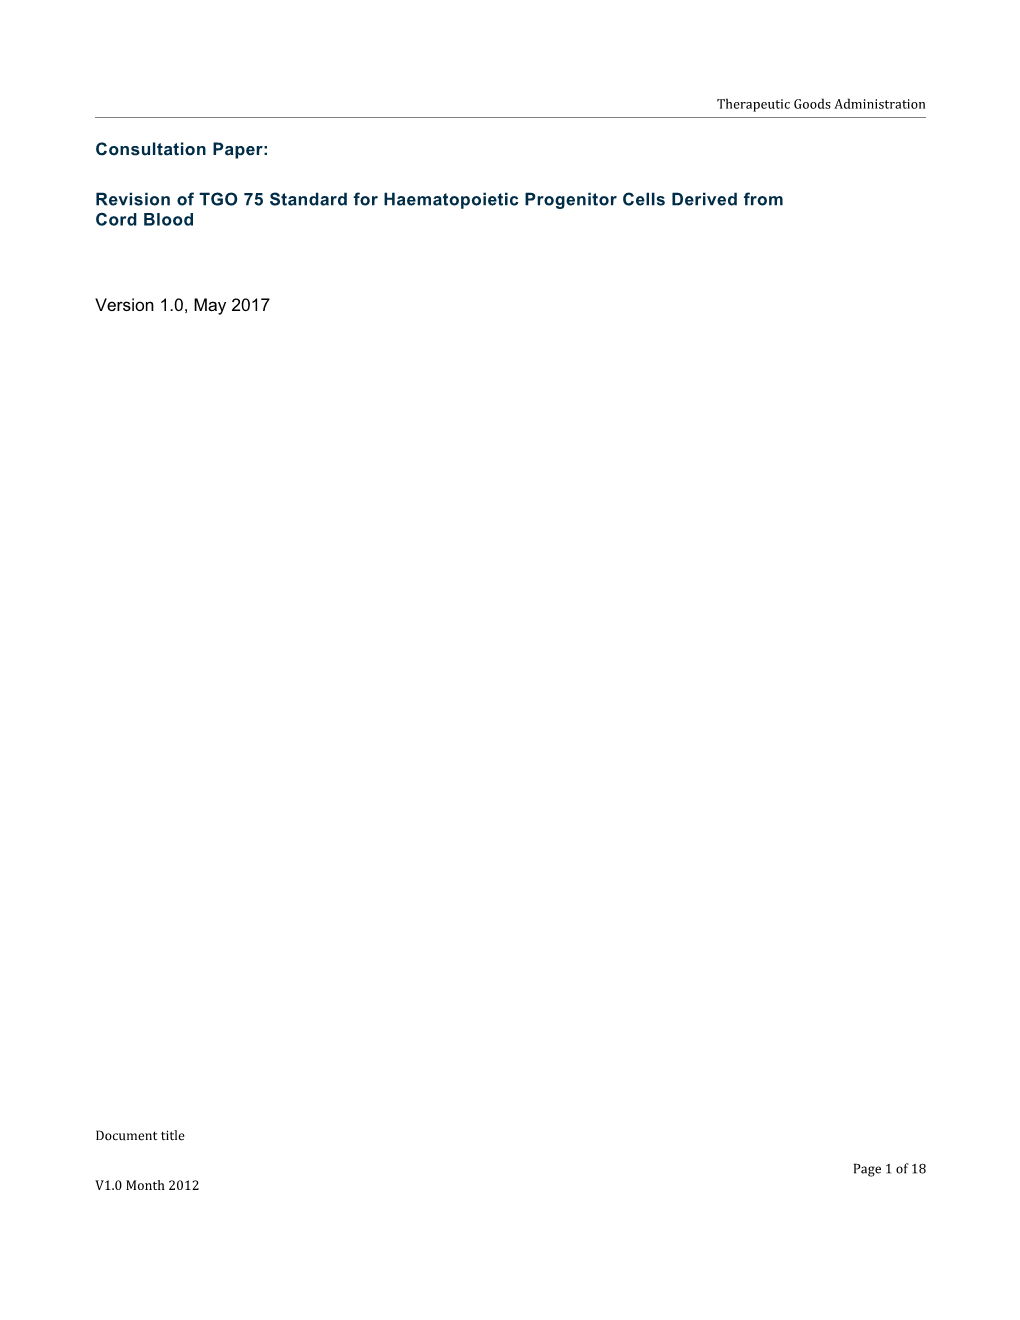 Consultation Paper: Revision of TGO 75 Standard for Haematopoietic Progenitor Cells Derived